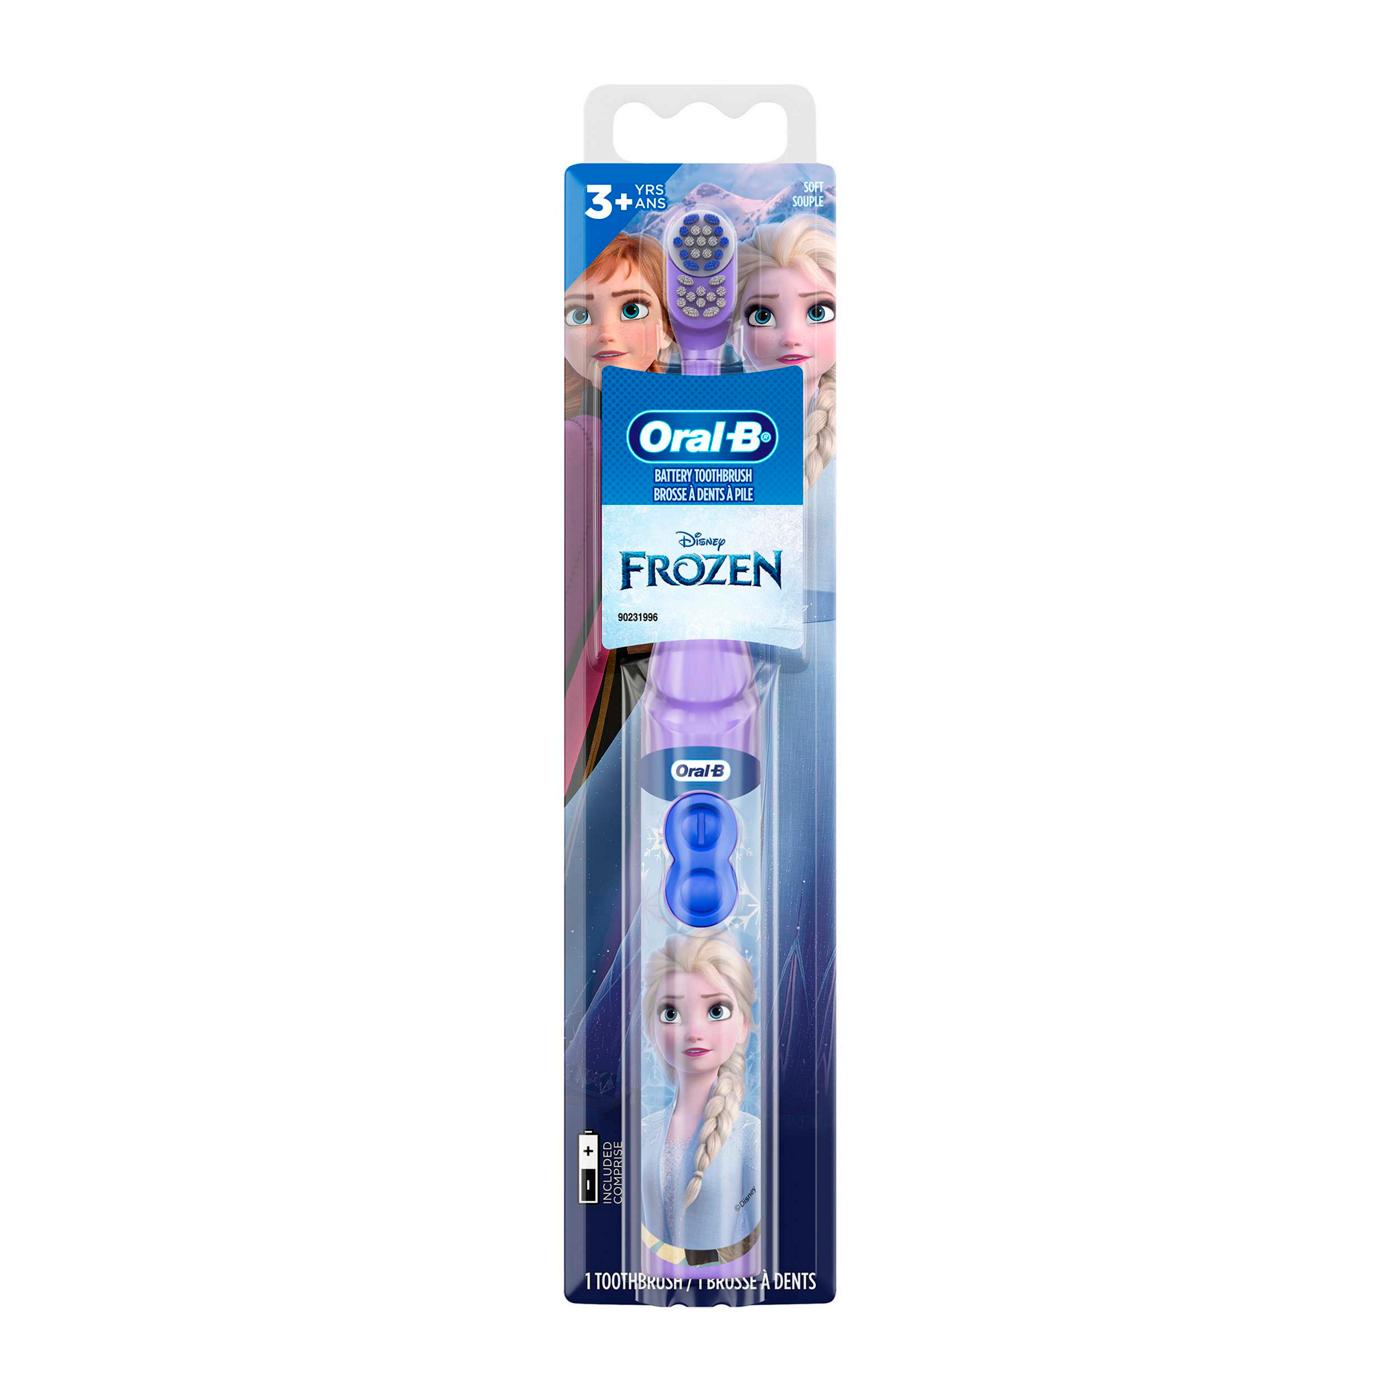 Oral-B Kids Disney Frozen Powered Toothbrush - Soft; image 1 of 9